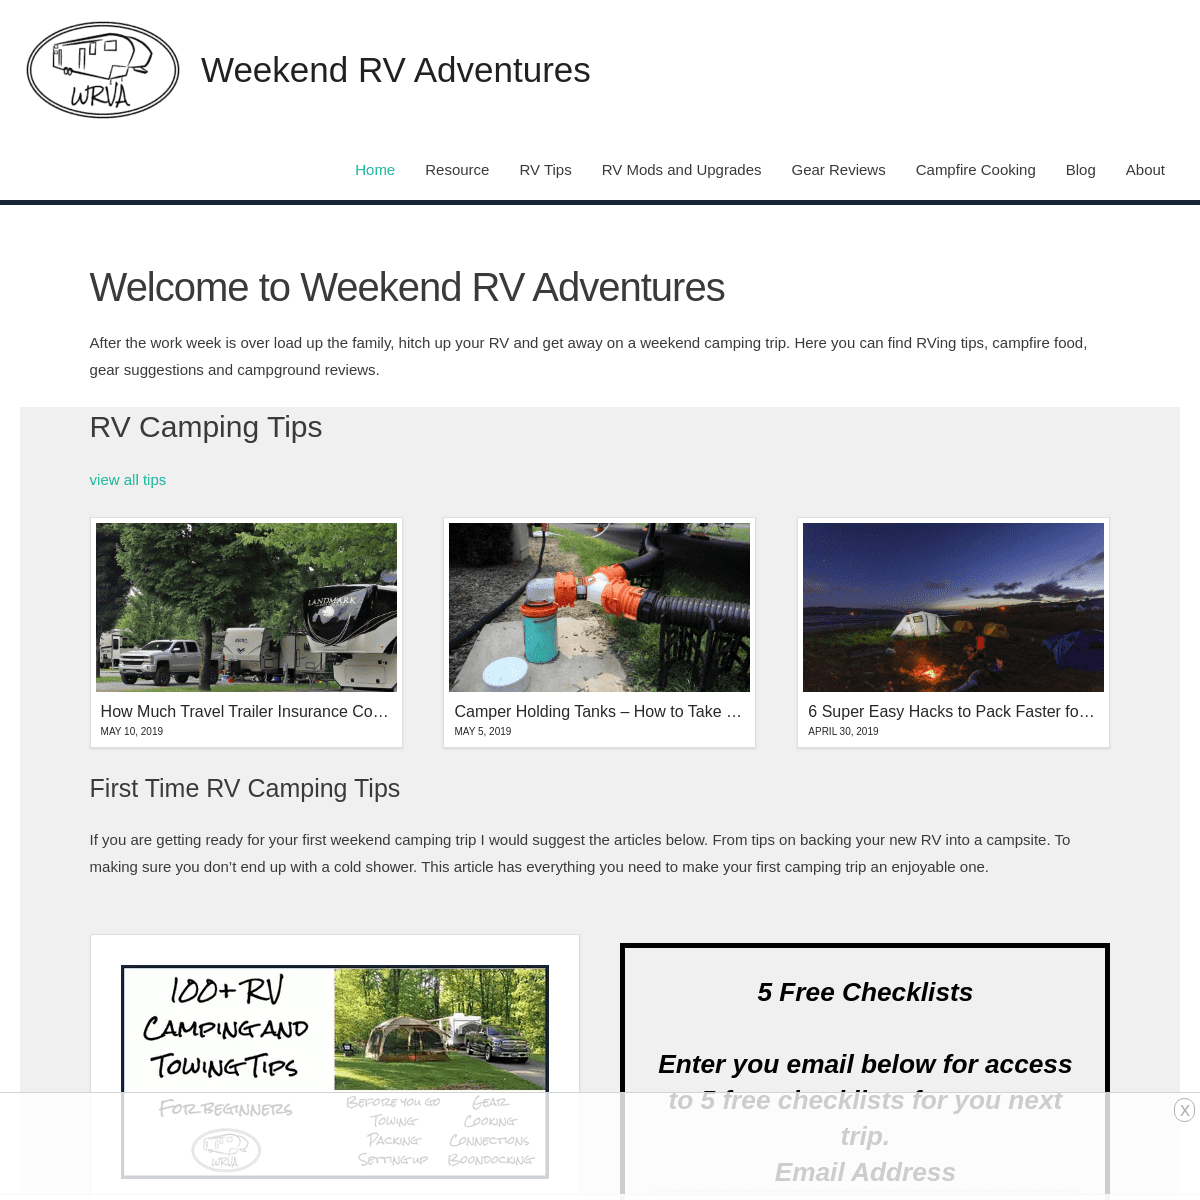 A complete backup of weekendrvadventures.com